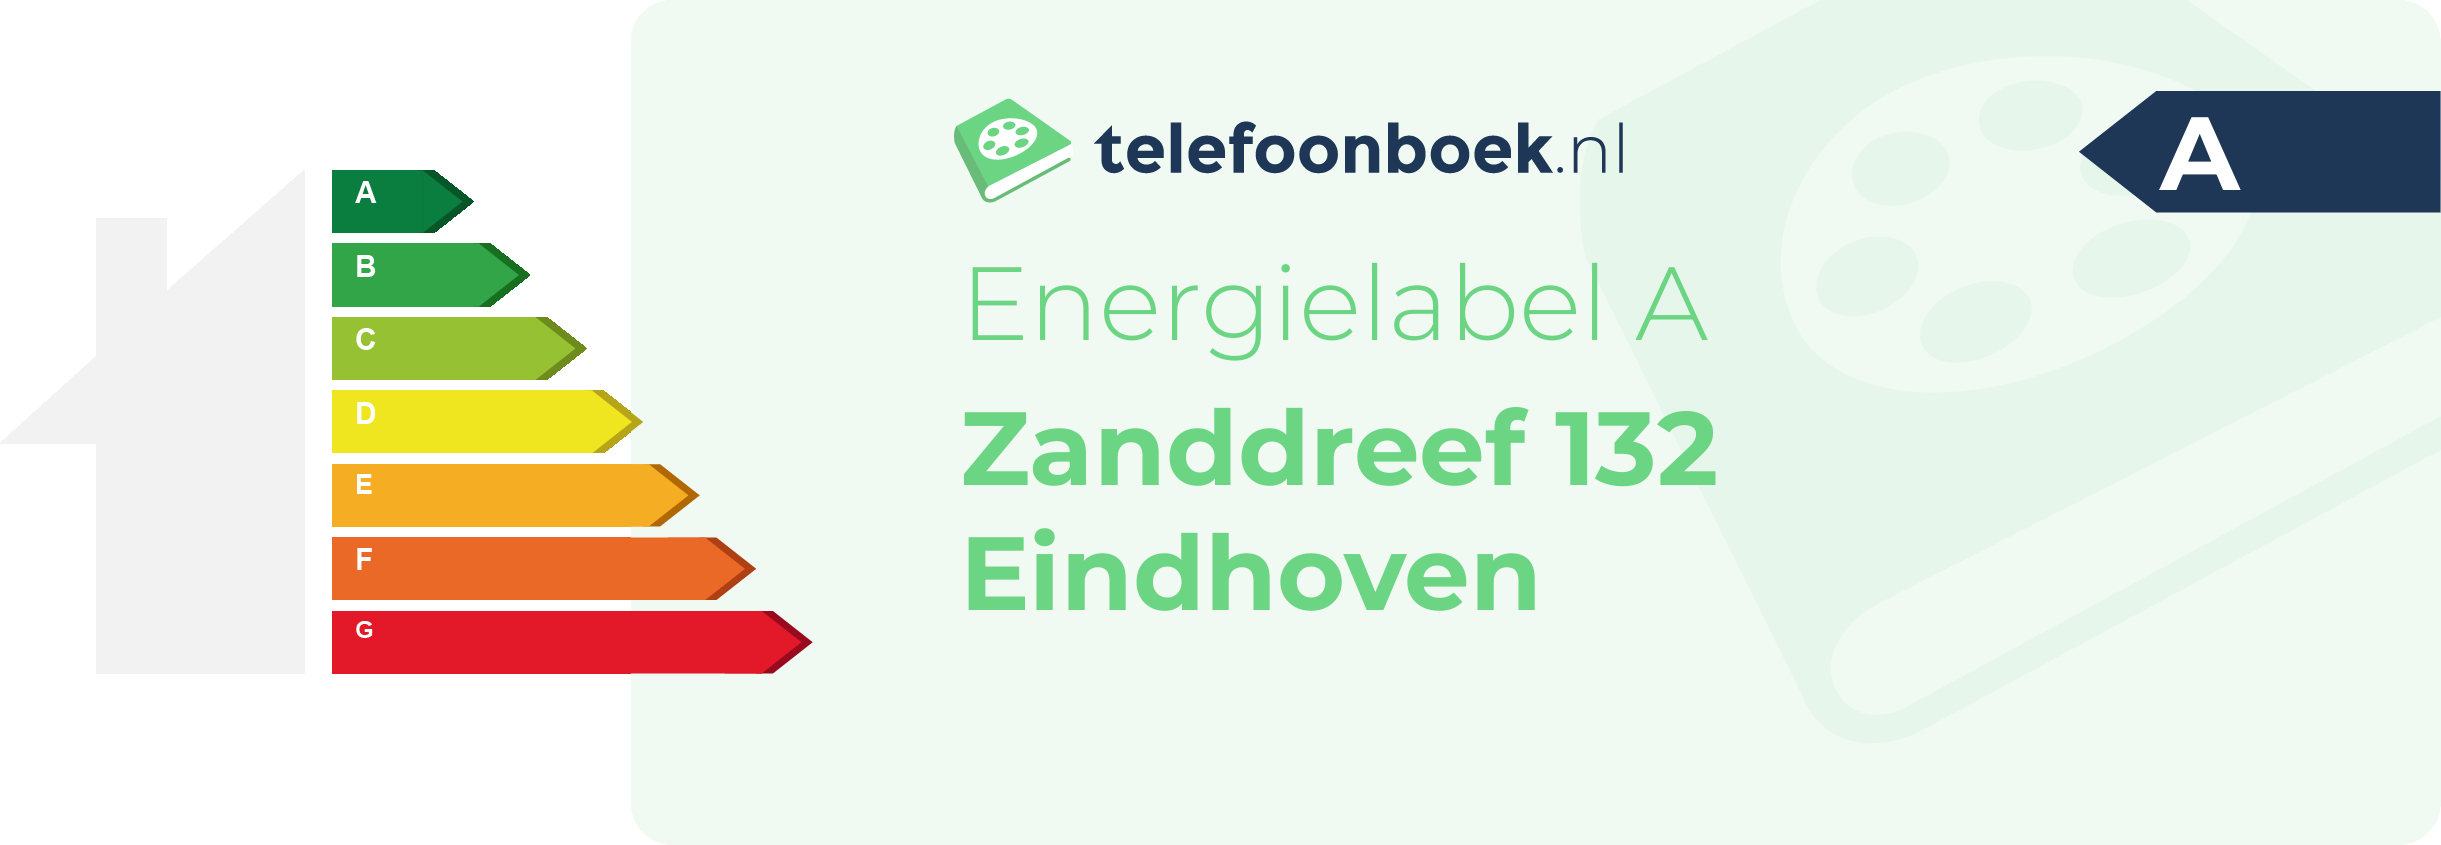 Energielabel Zanddreef 132 Eindhoven